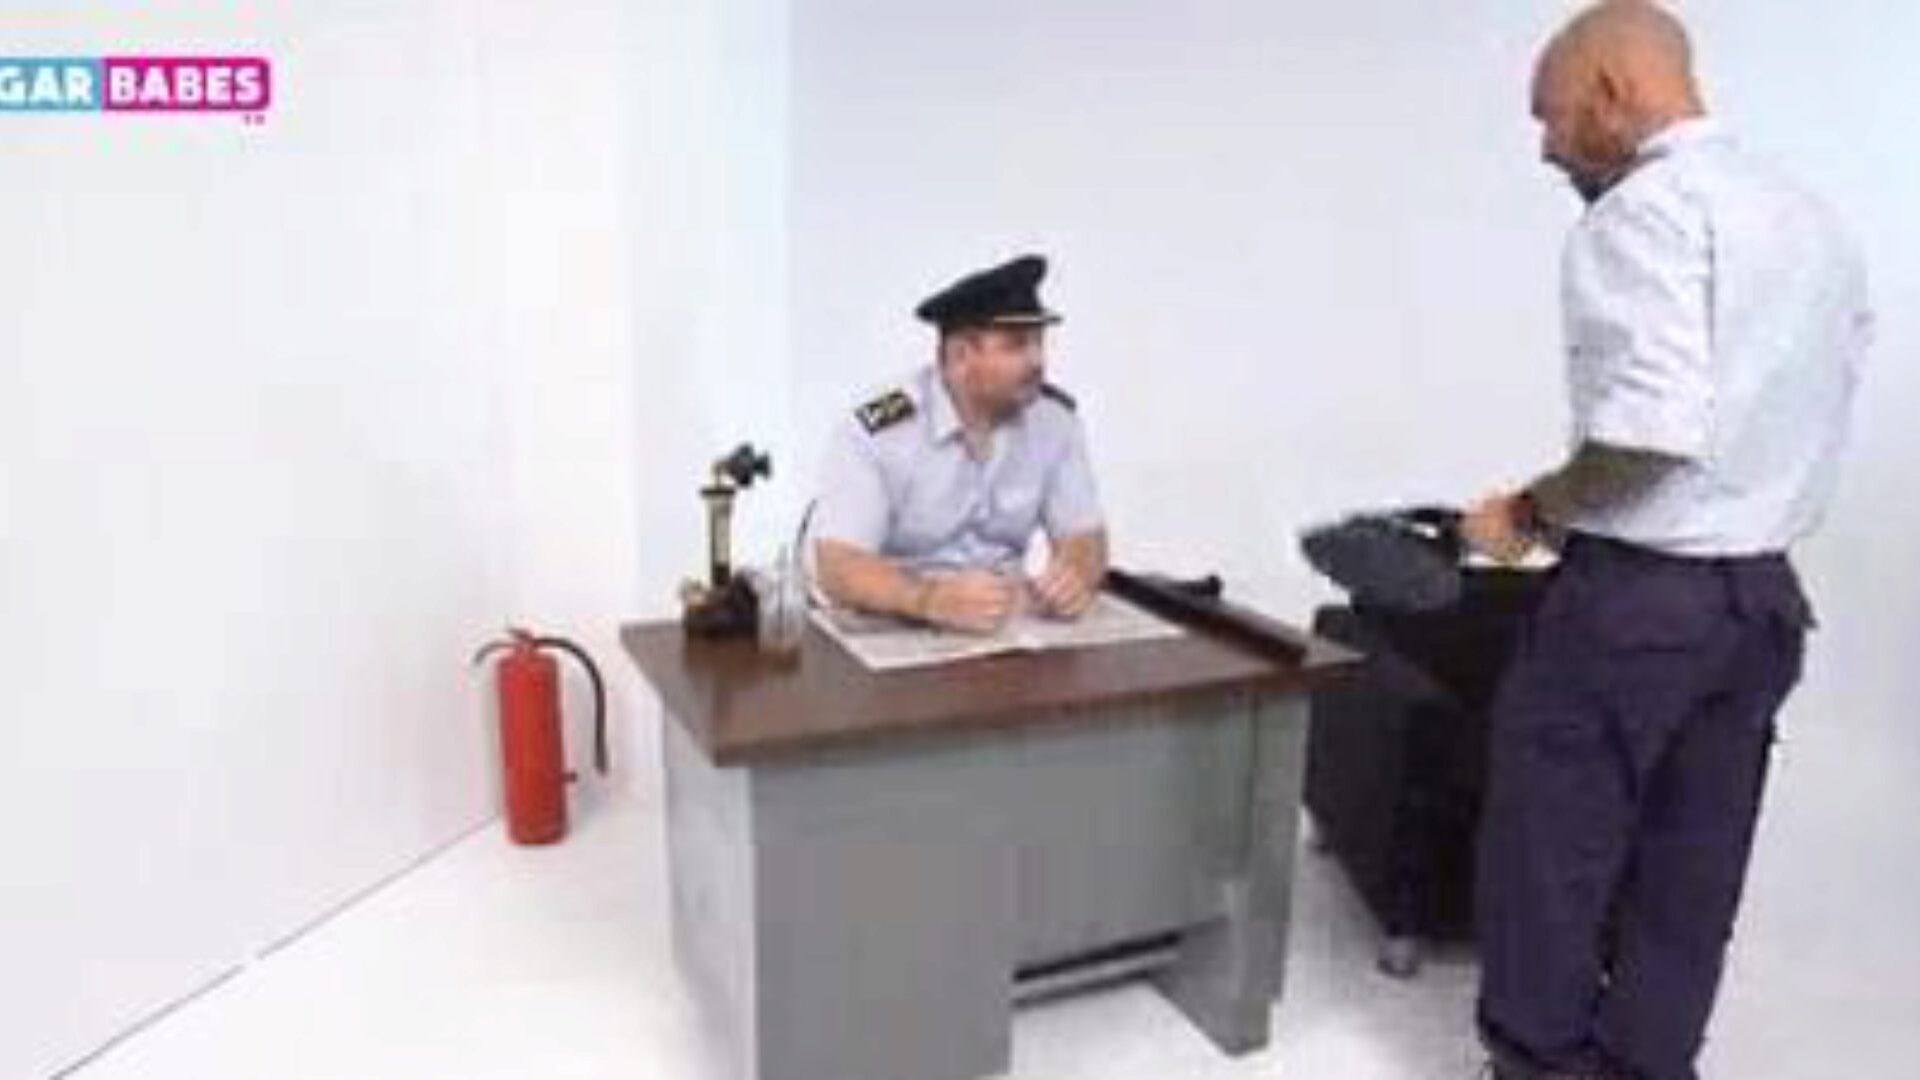 sugarbabestv: griekse politieagenten gek neukfeest